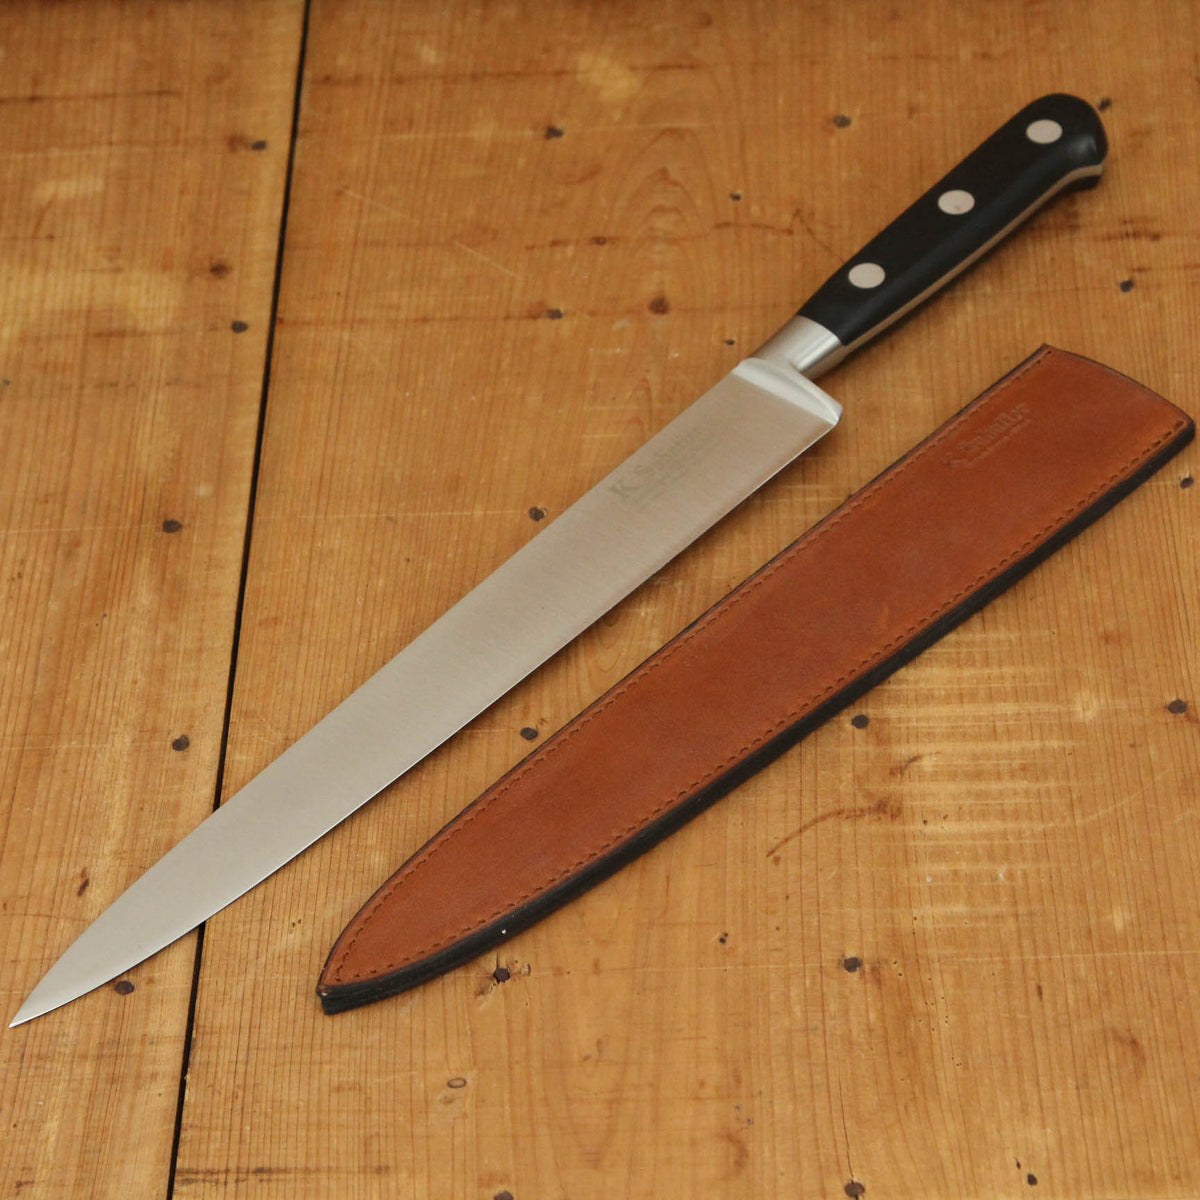 K Sabatier 1834 Series Stainless Knife Set - 5 Pieces